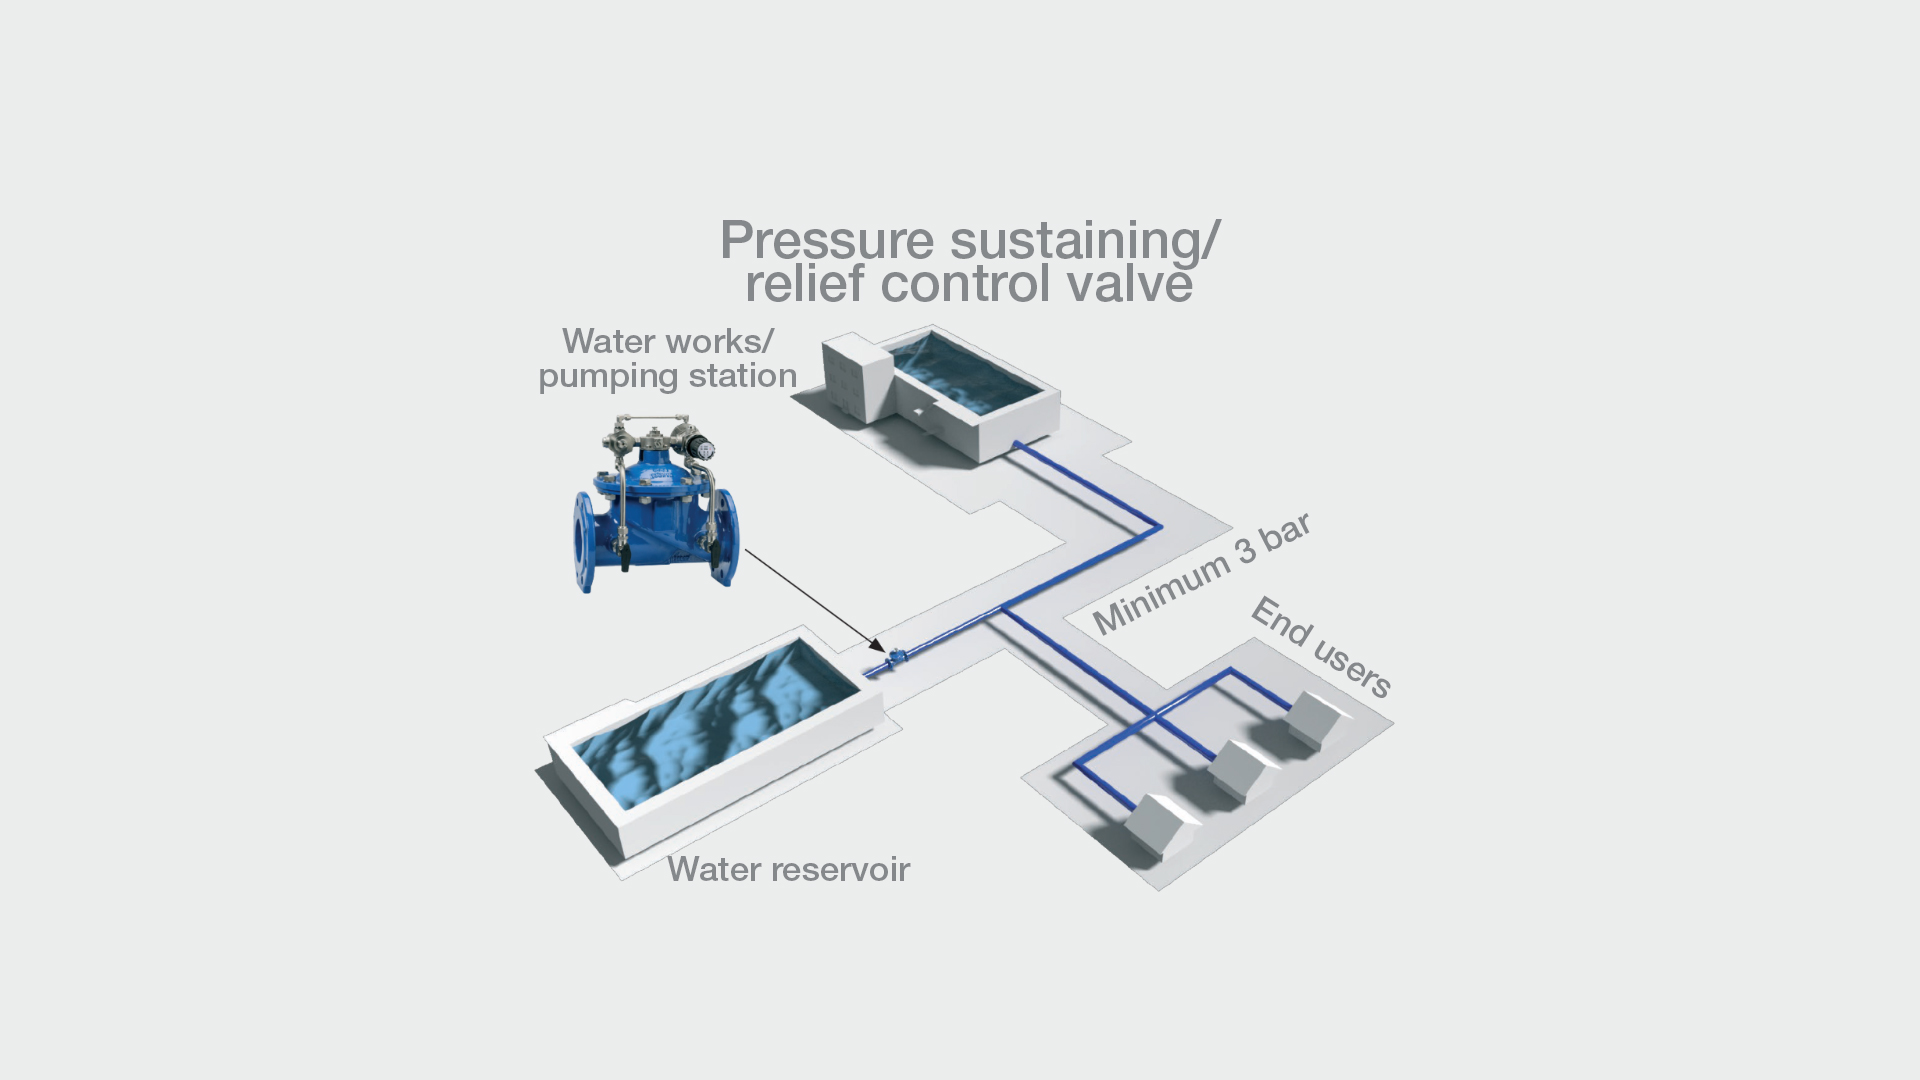 Illustration of pressure reducing AVK control valve